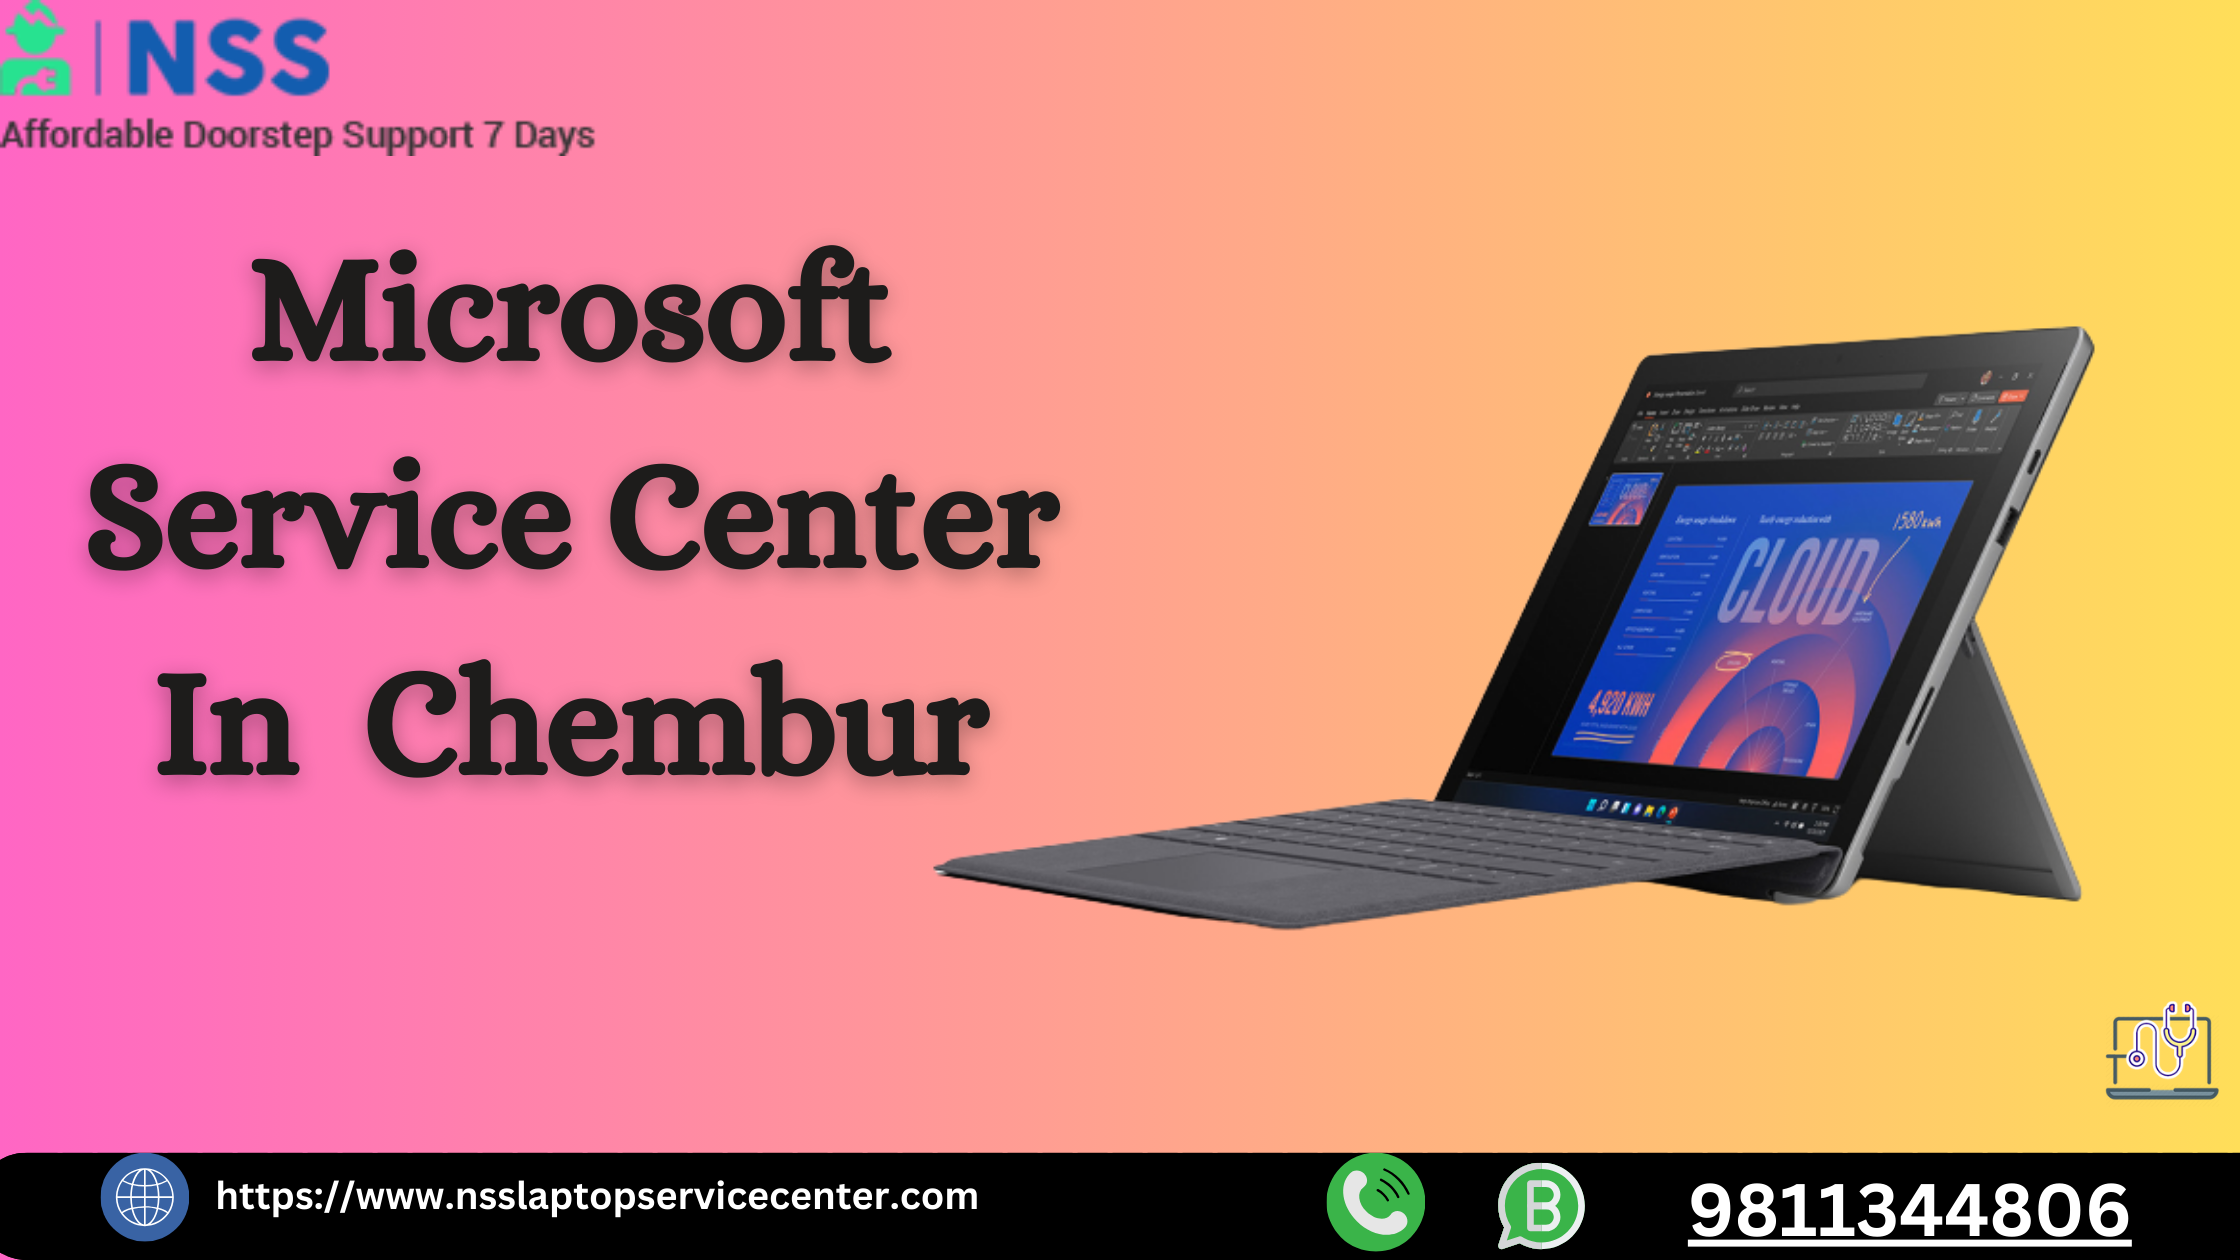 Microsoft Service Center in Chembur Near Mumbai